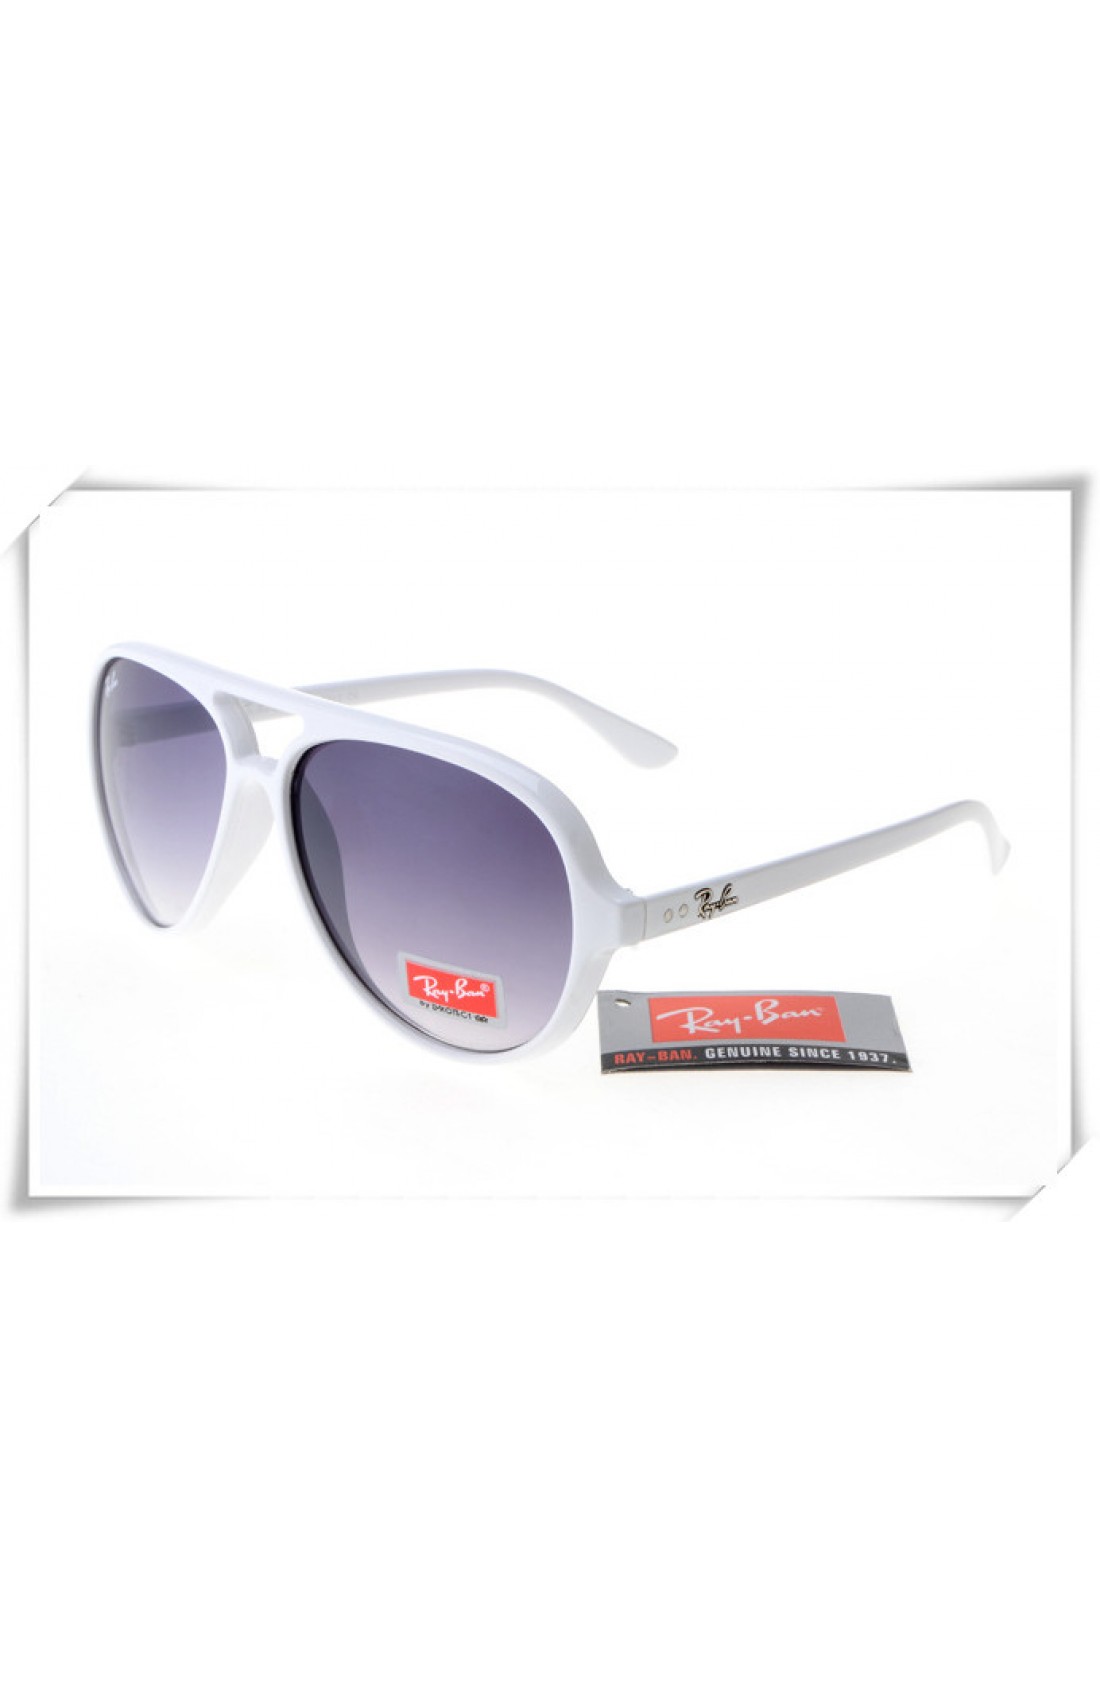 ray ban aviator sunglasses white frame